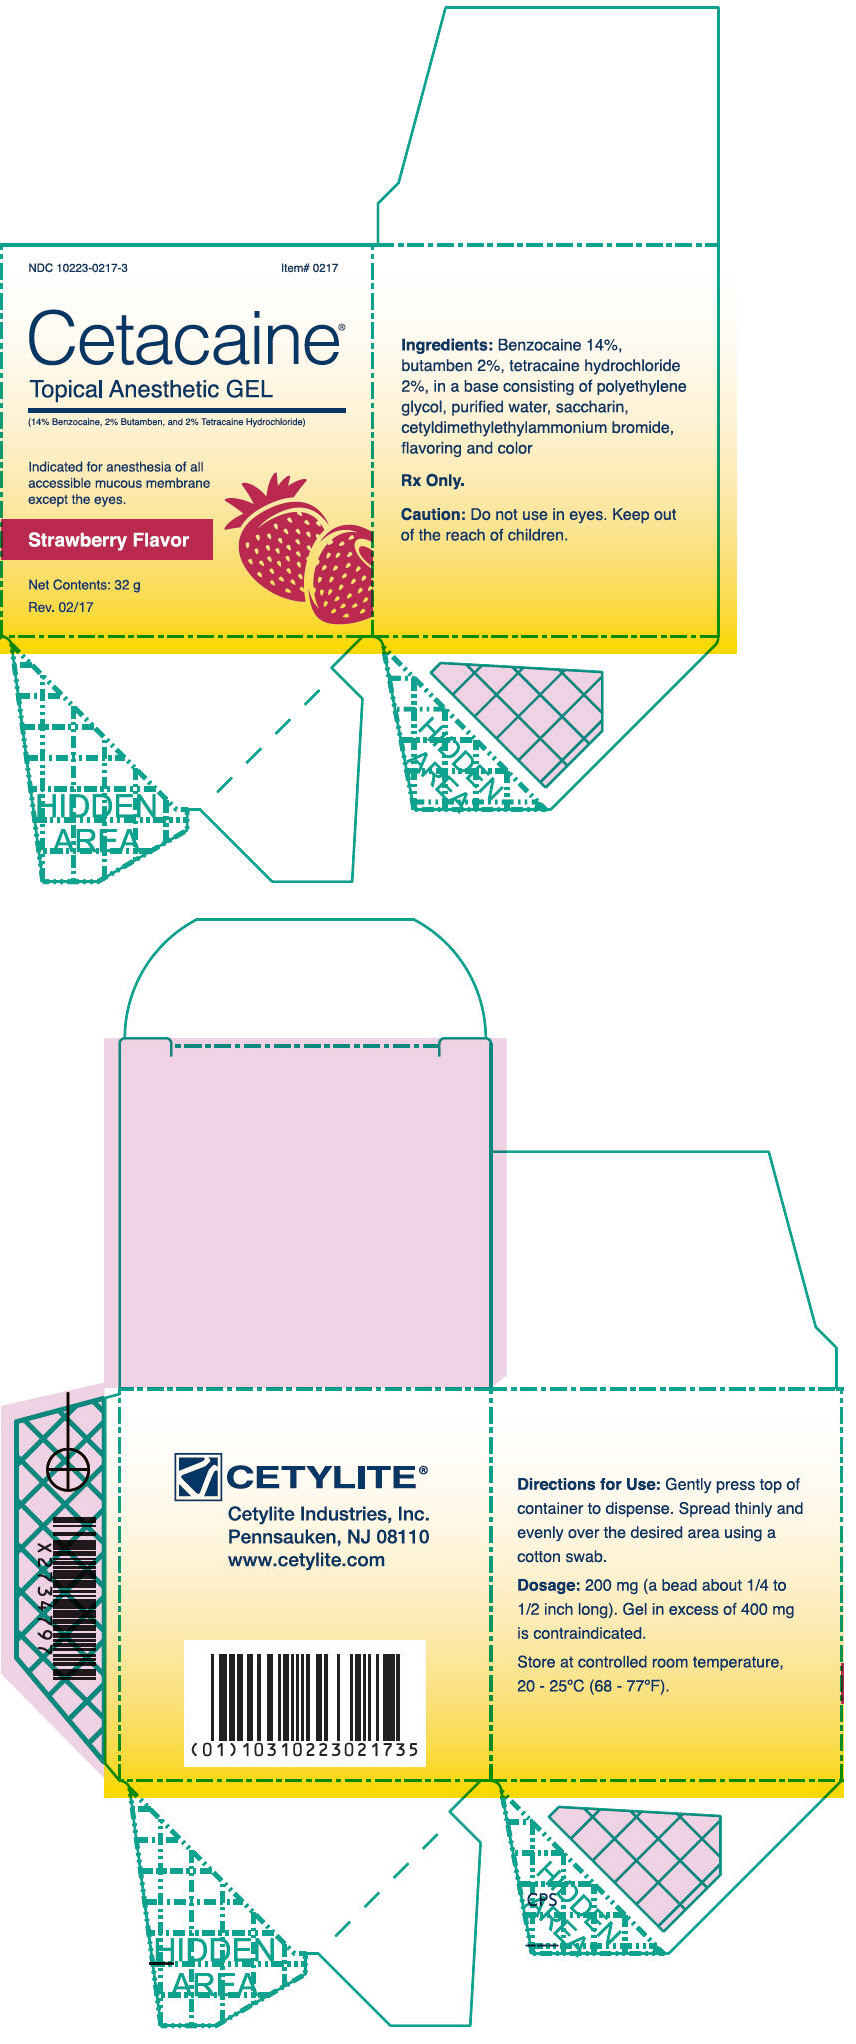 PRINCIPAL DISPLAY PANEL - 32 g Jar Box - Strawberry